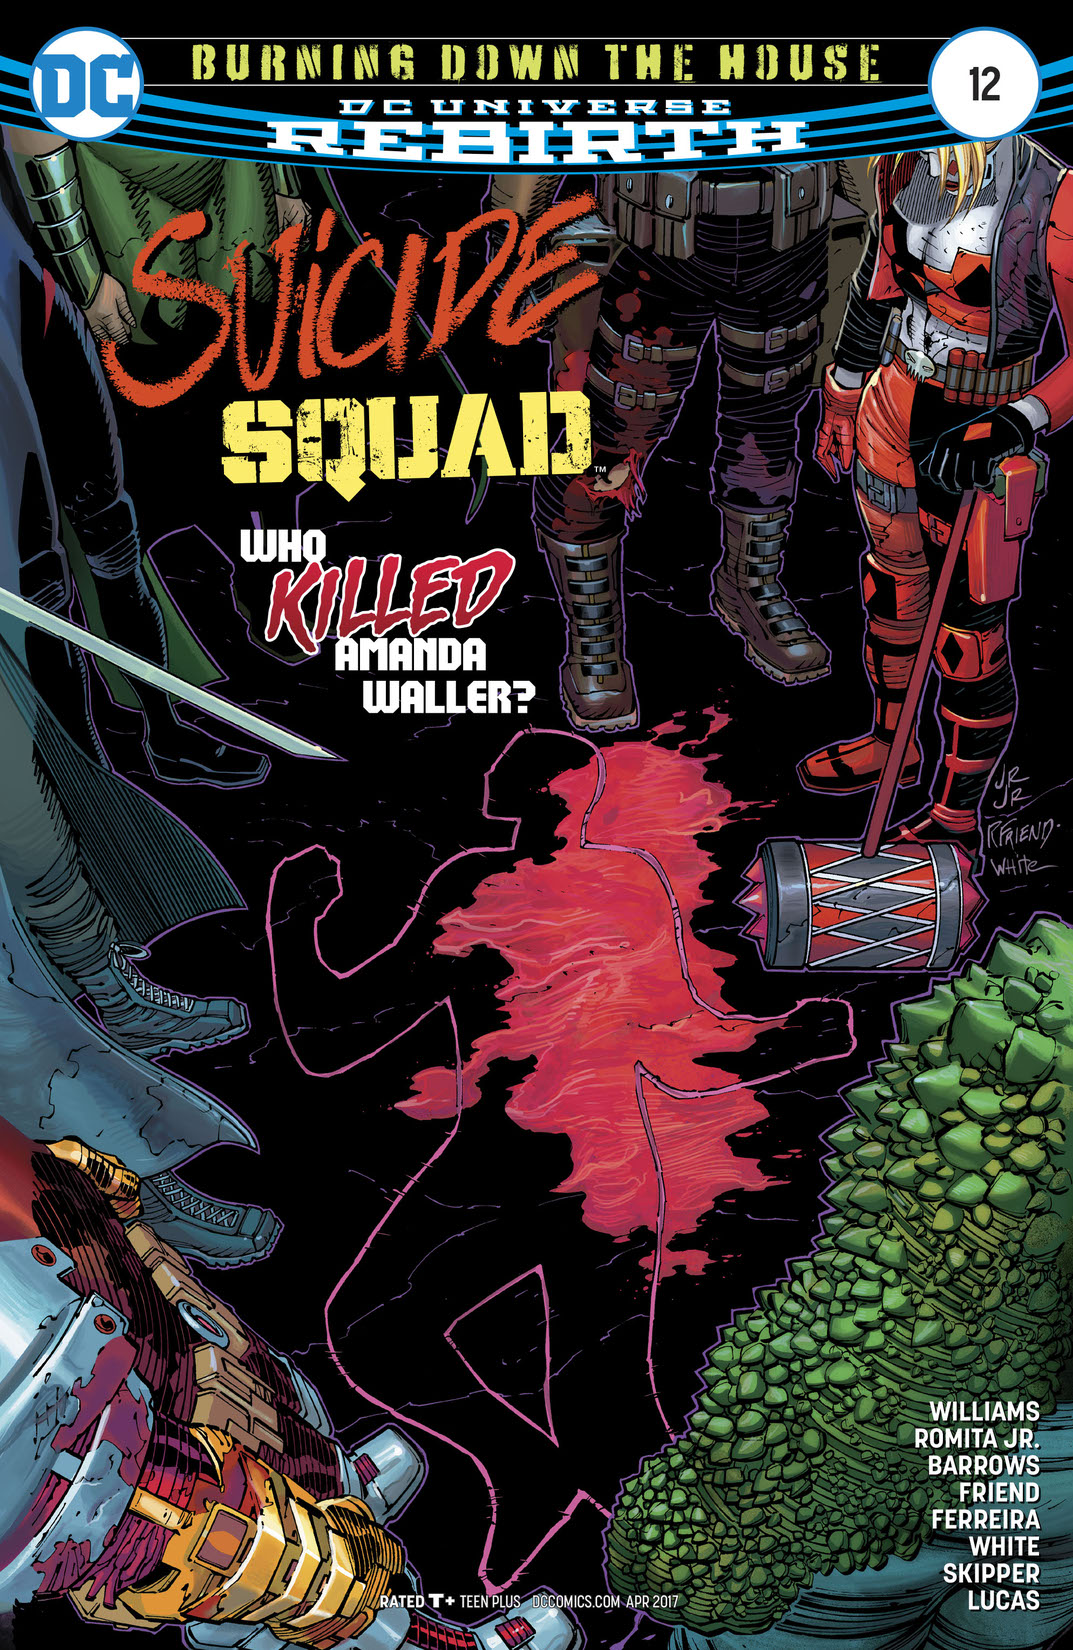 Suicide Squad (2016-) #12 preview images